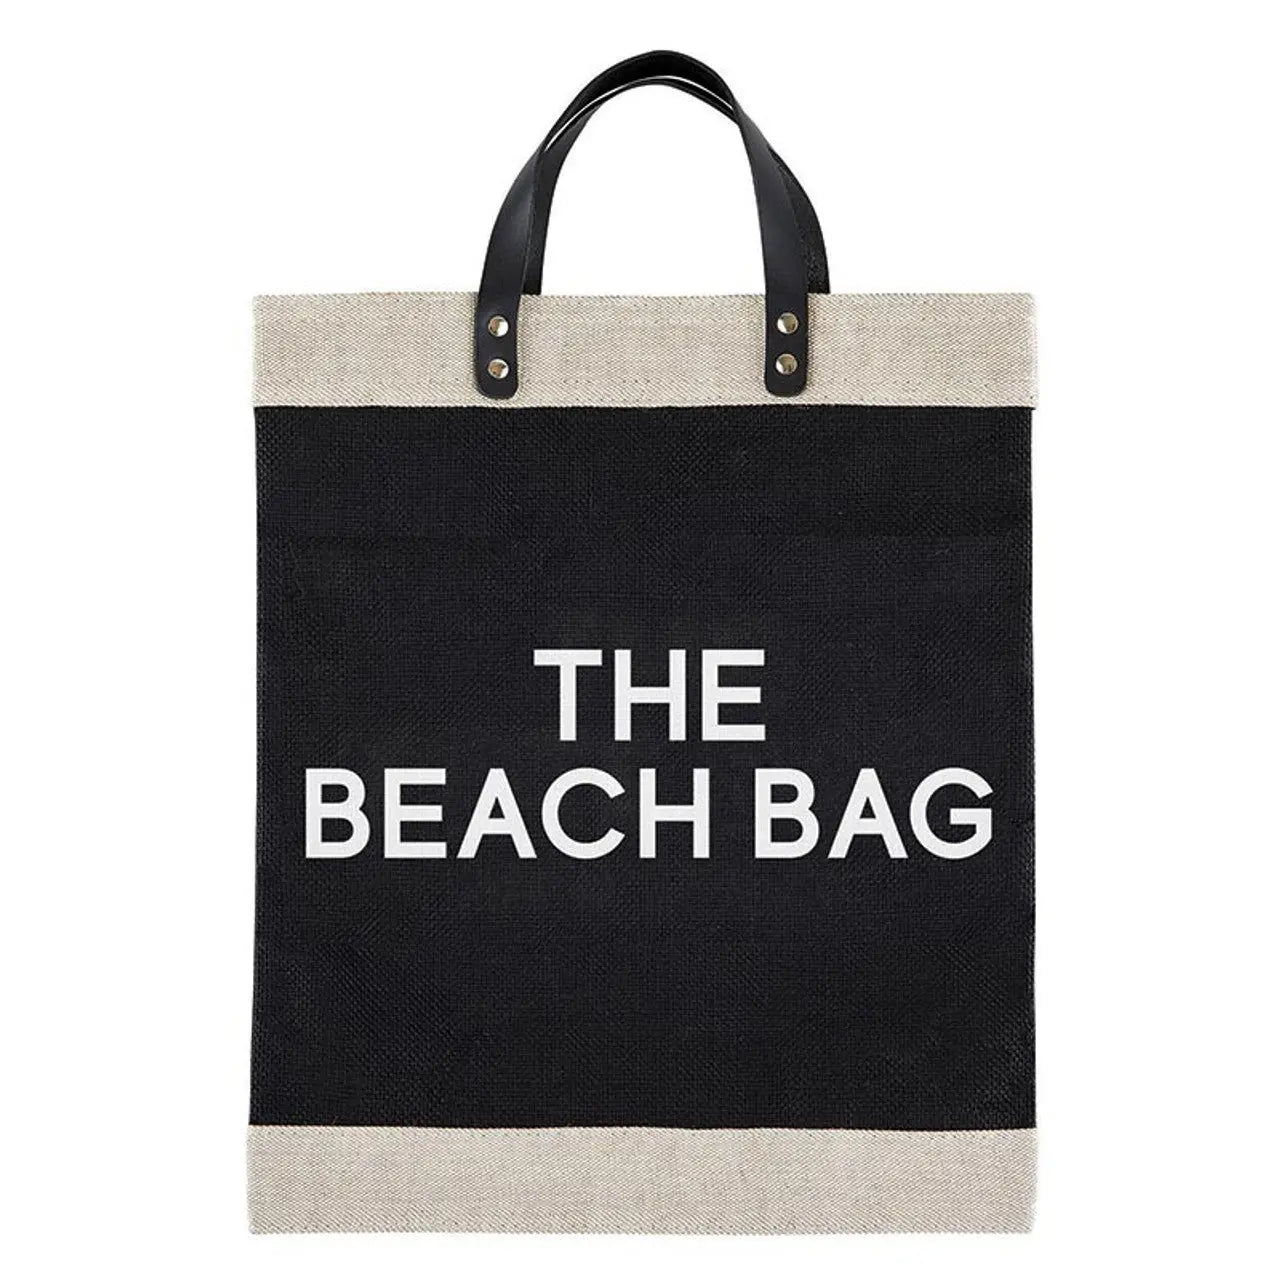 Santa Barbara Black Market Tote - The Beach Bag CREATIVE BRANDS